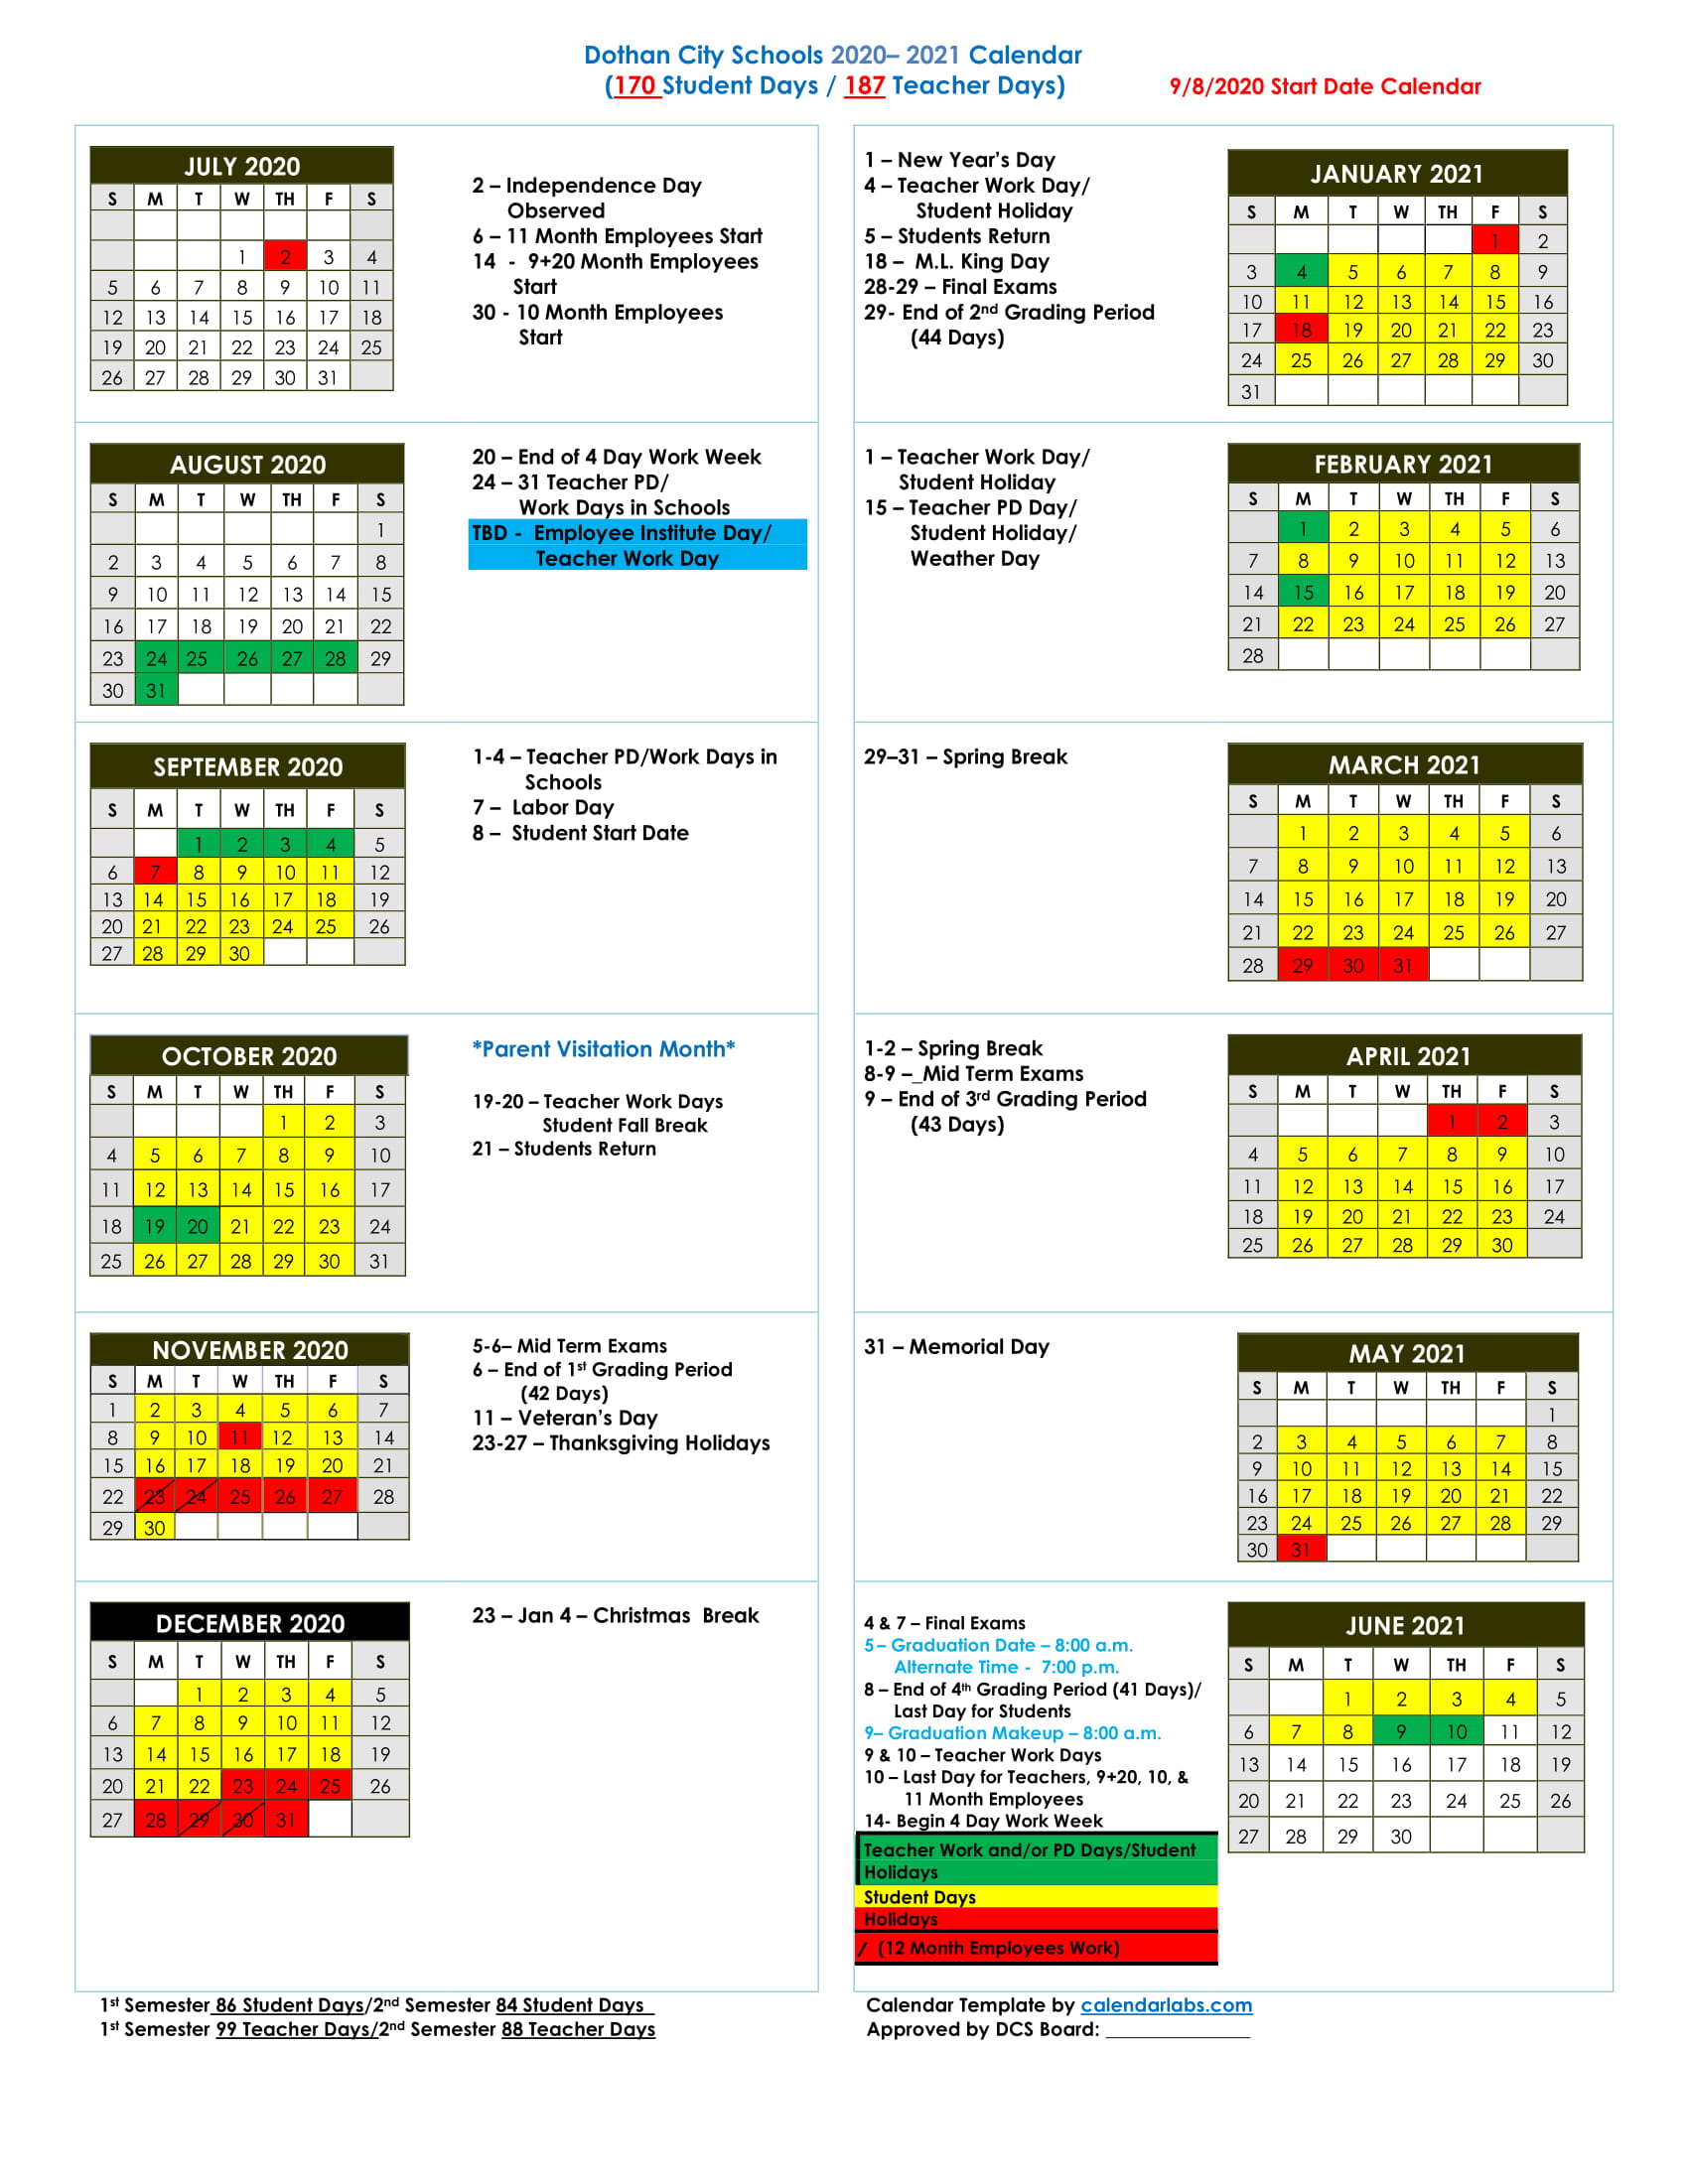 Dothan City Schools Calendar 2021 And 2022